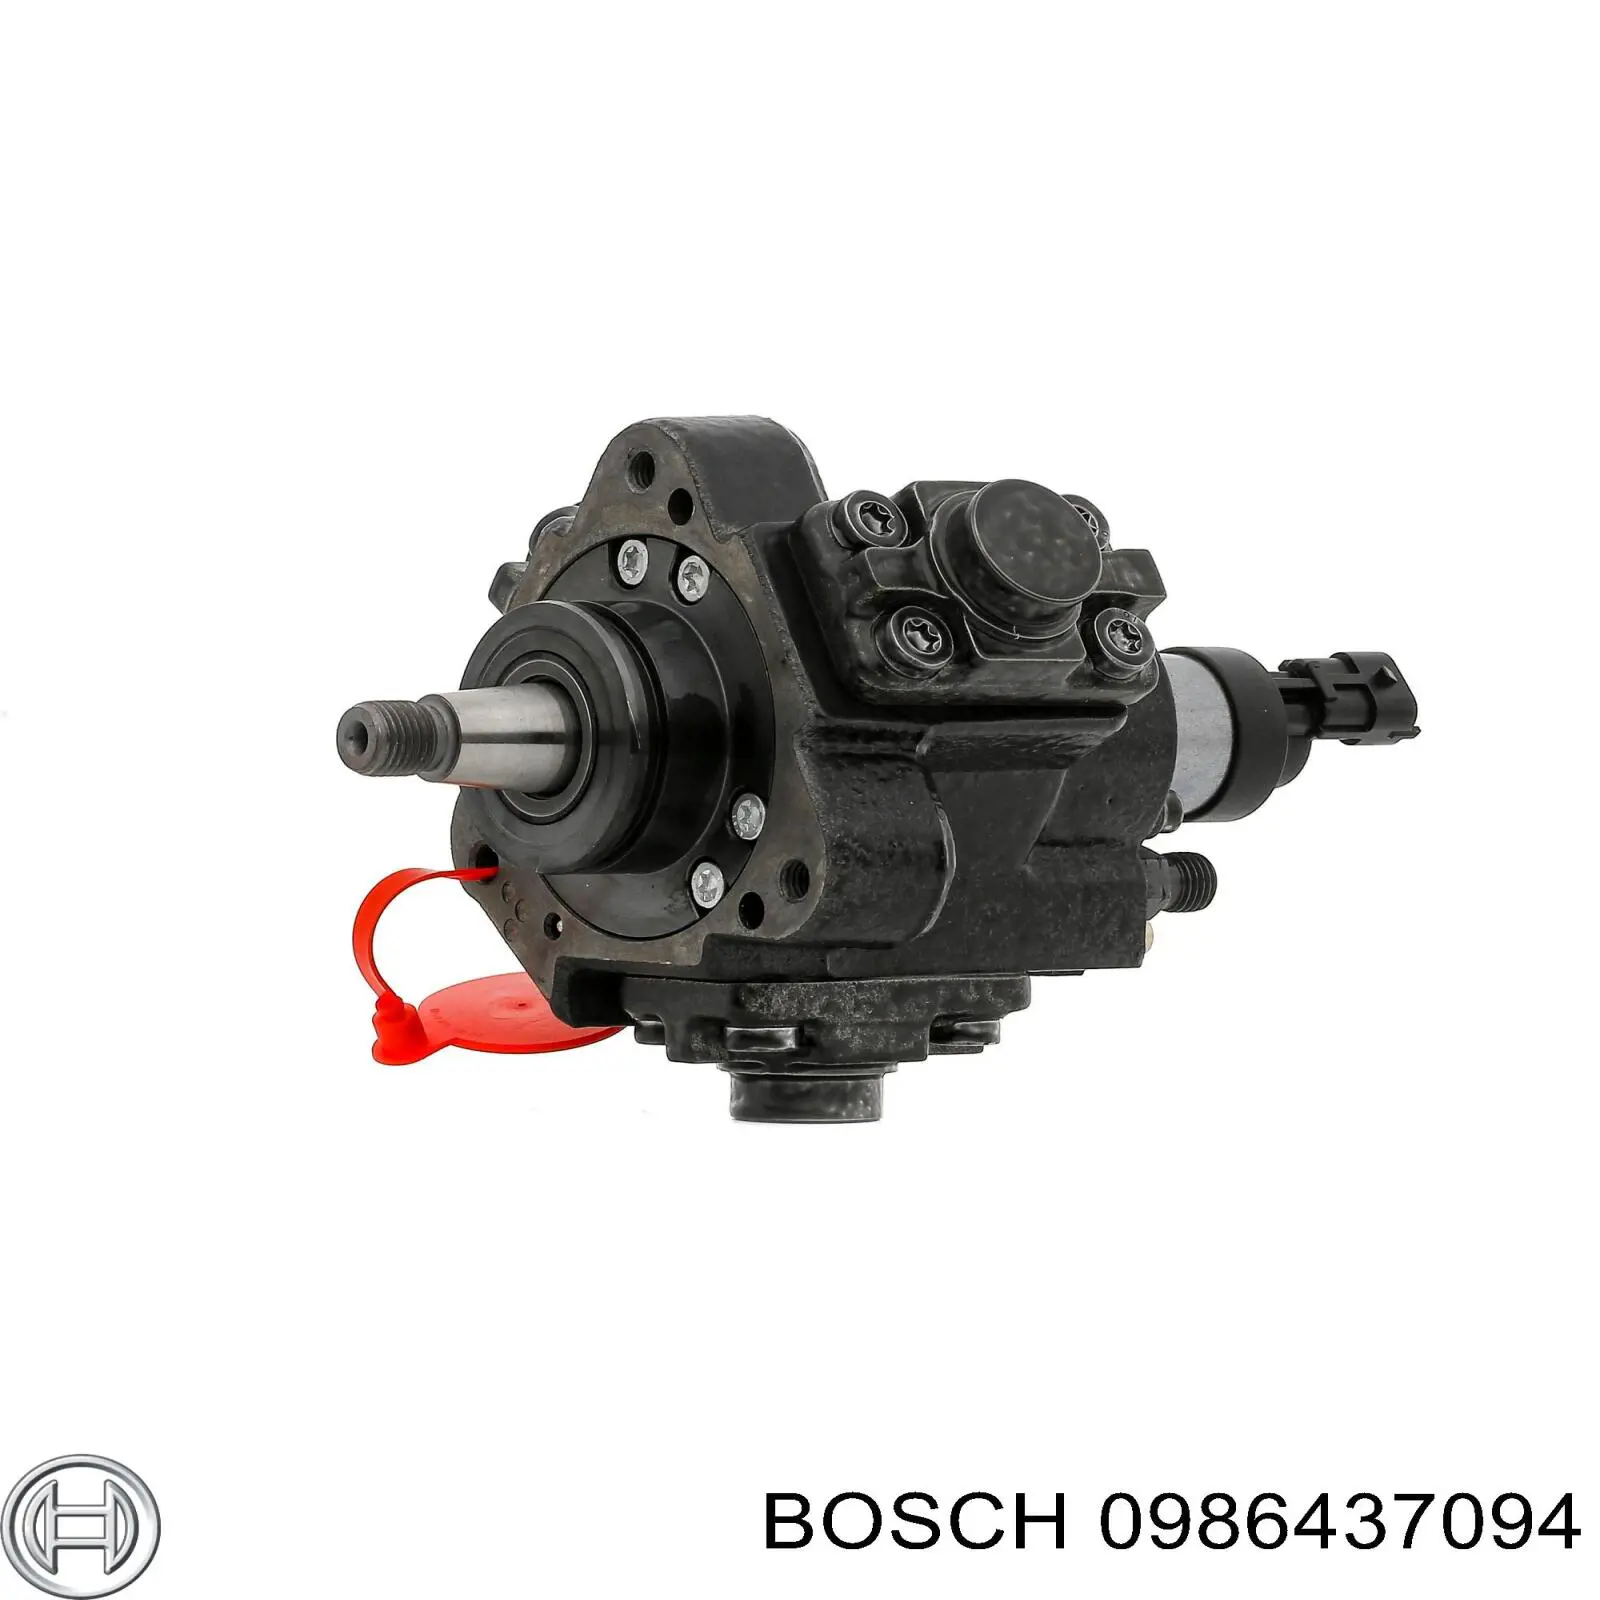 0986437094 Bosch bomba inyectora